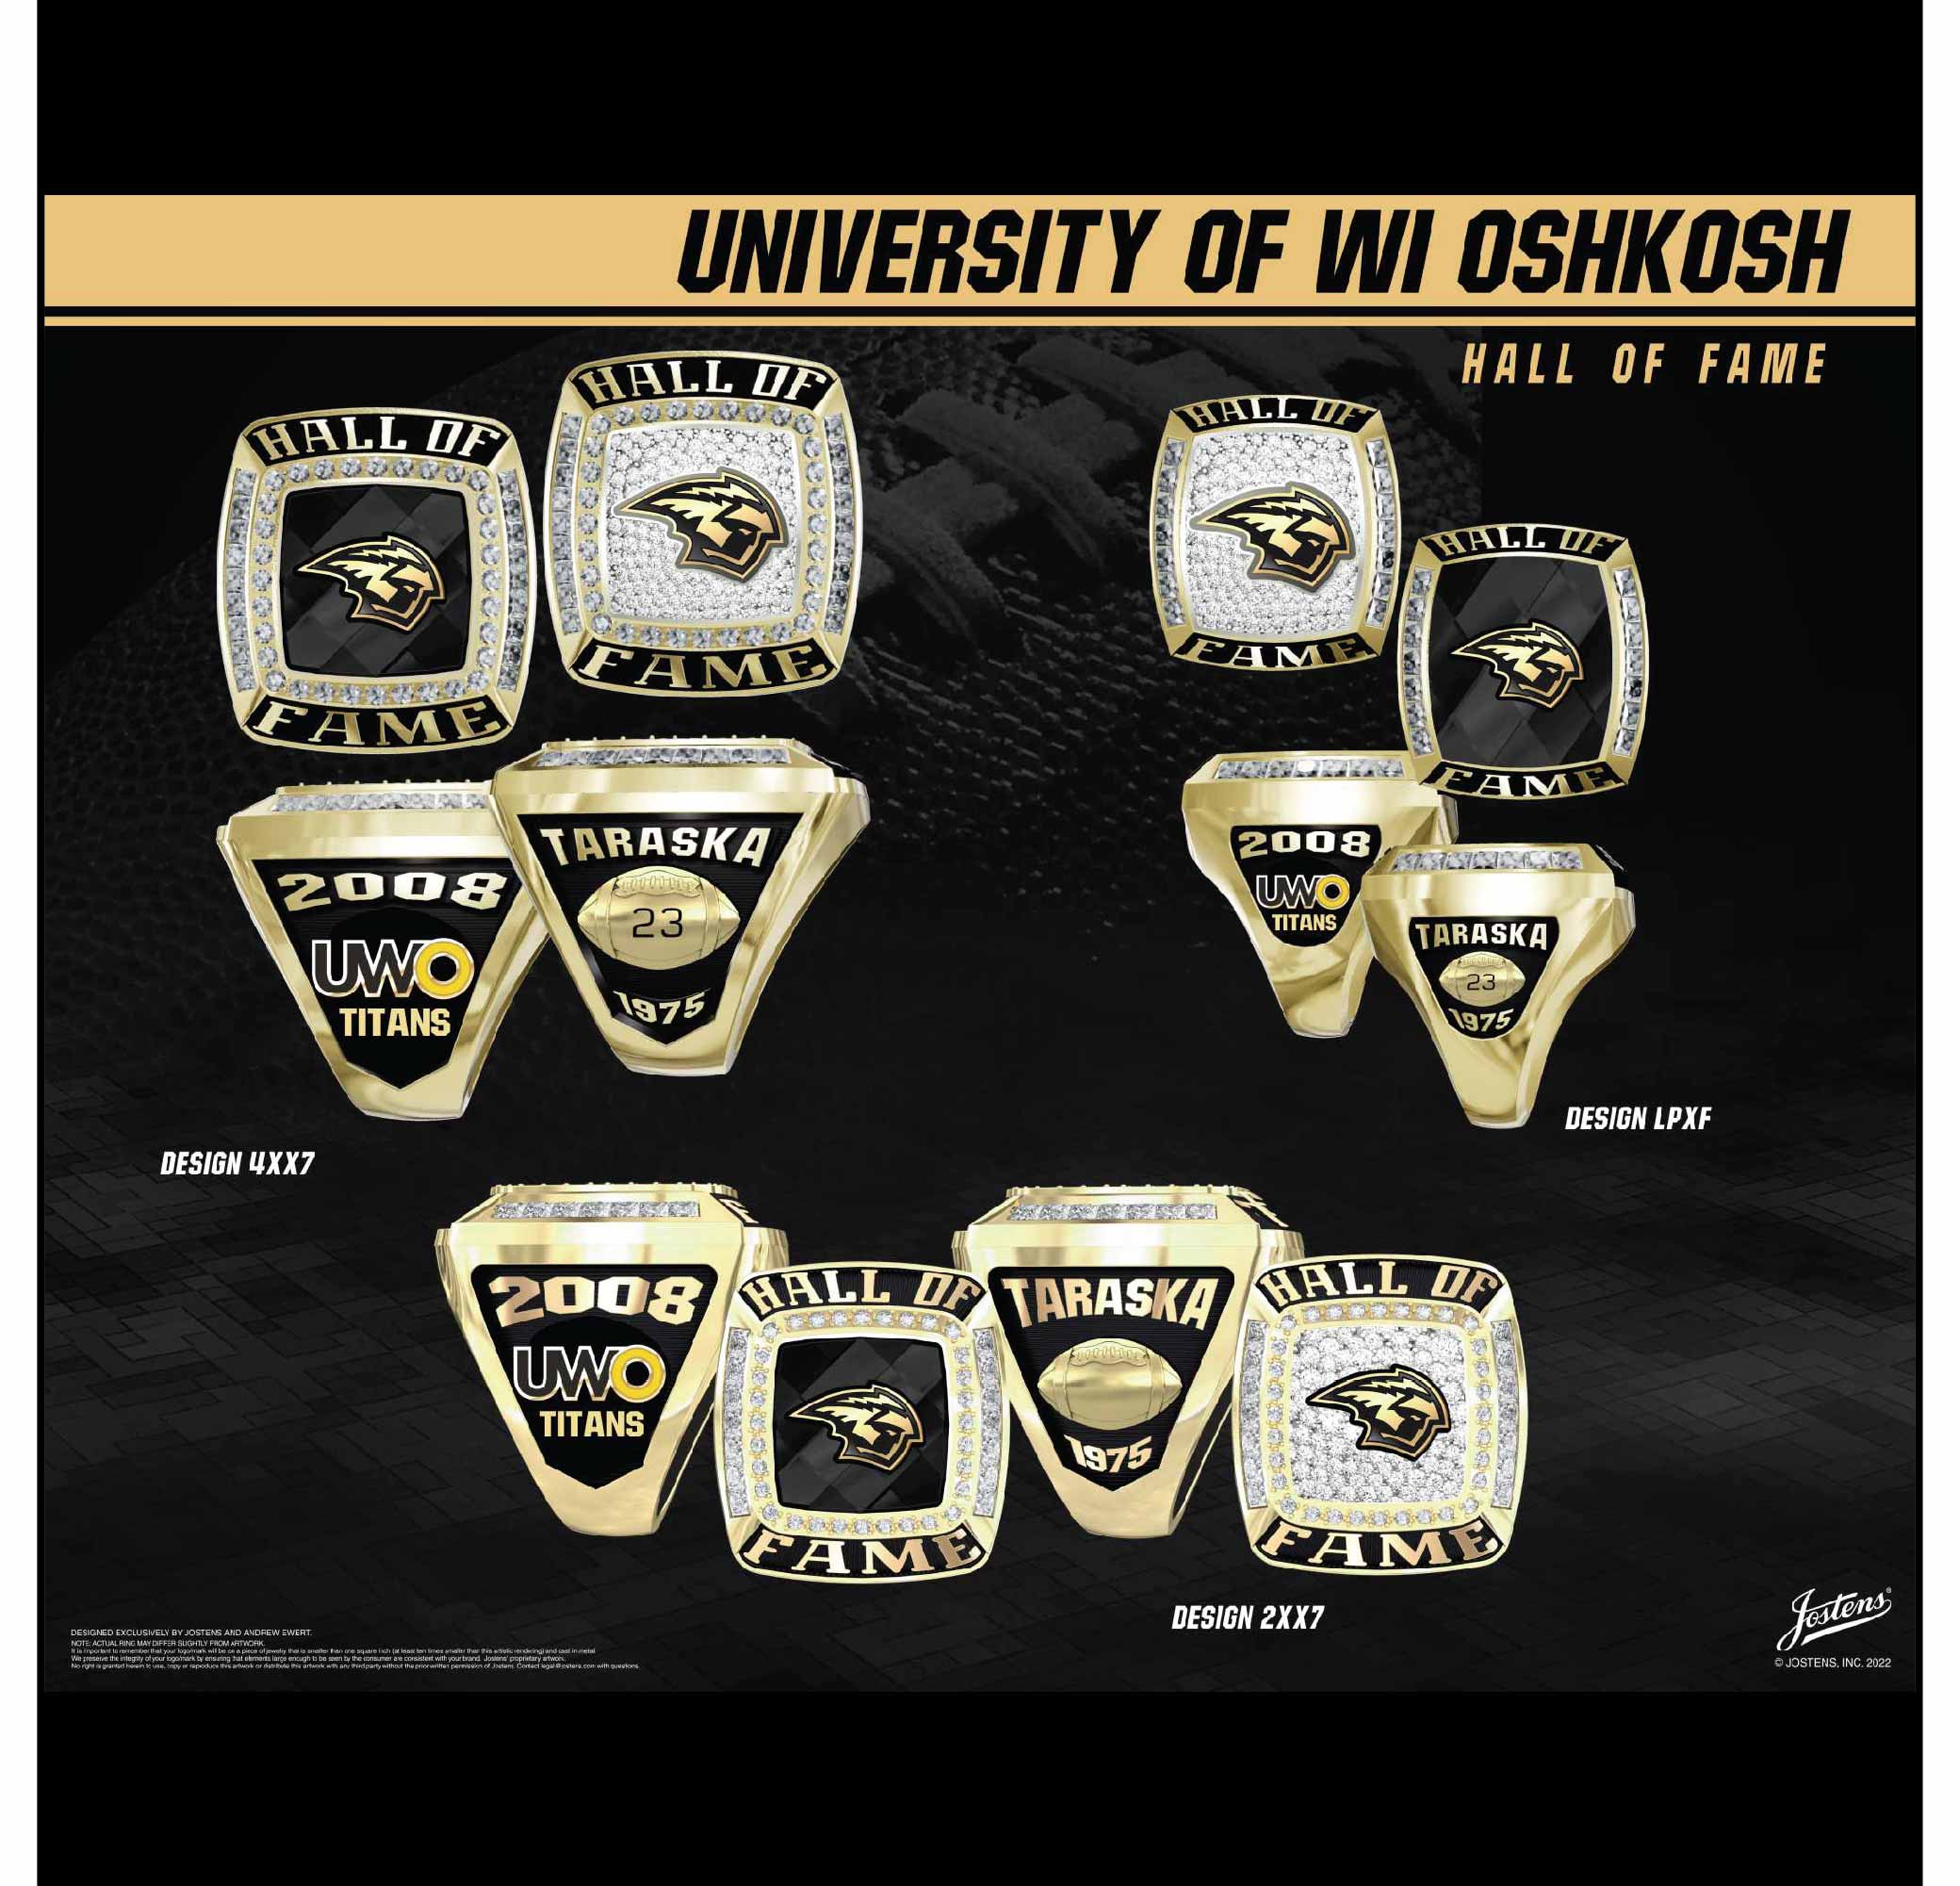 University of Wisconsin Oshkosh Football 2008 Hall of Fame Championship Ring